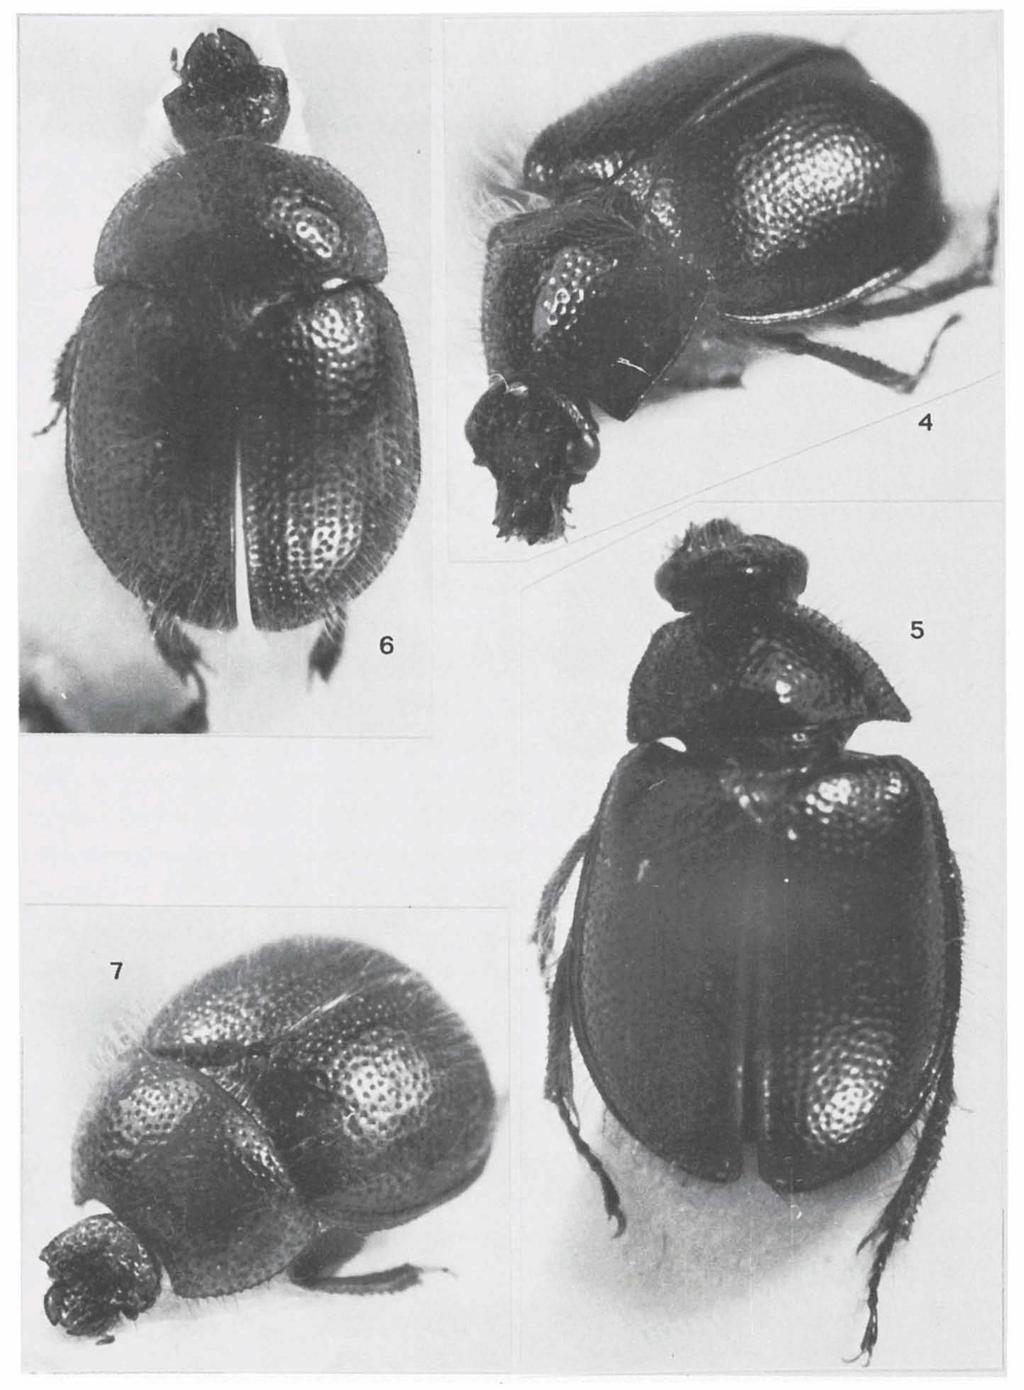 KUIJTEN: INDO-MALAYAN HYBOSORINAE 9 Figs. 4-5. Microphaeochroops hirsutus Pic, holotype, c.